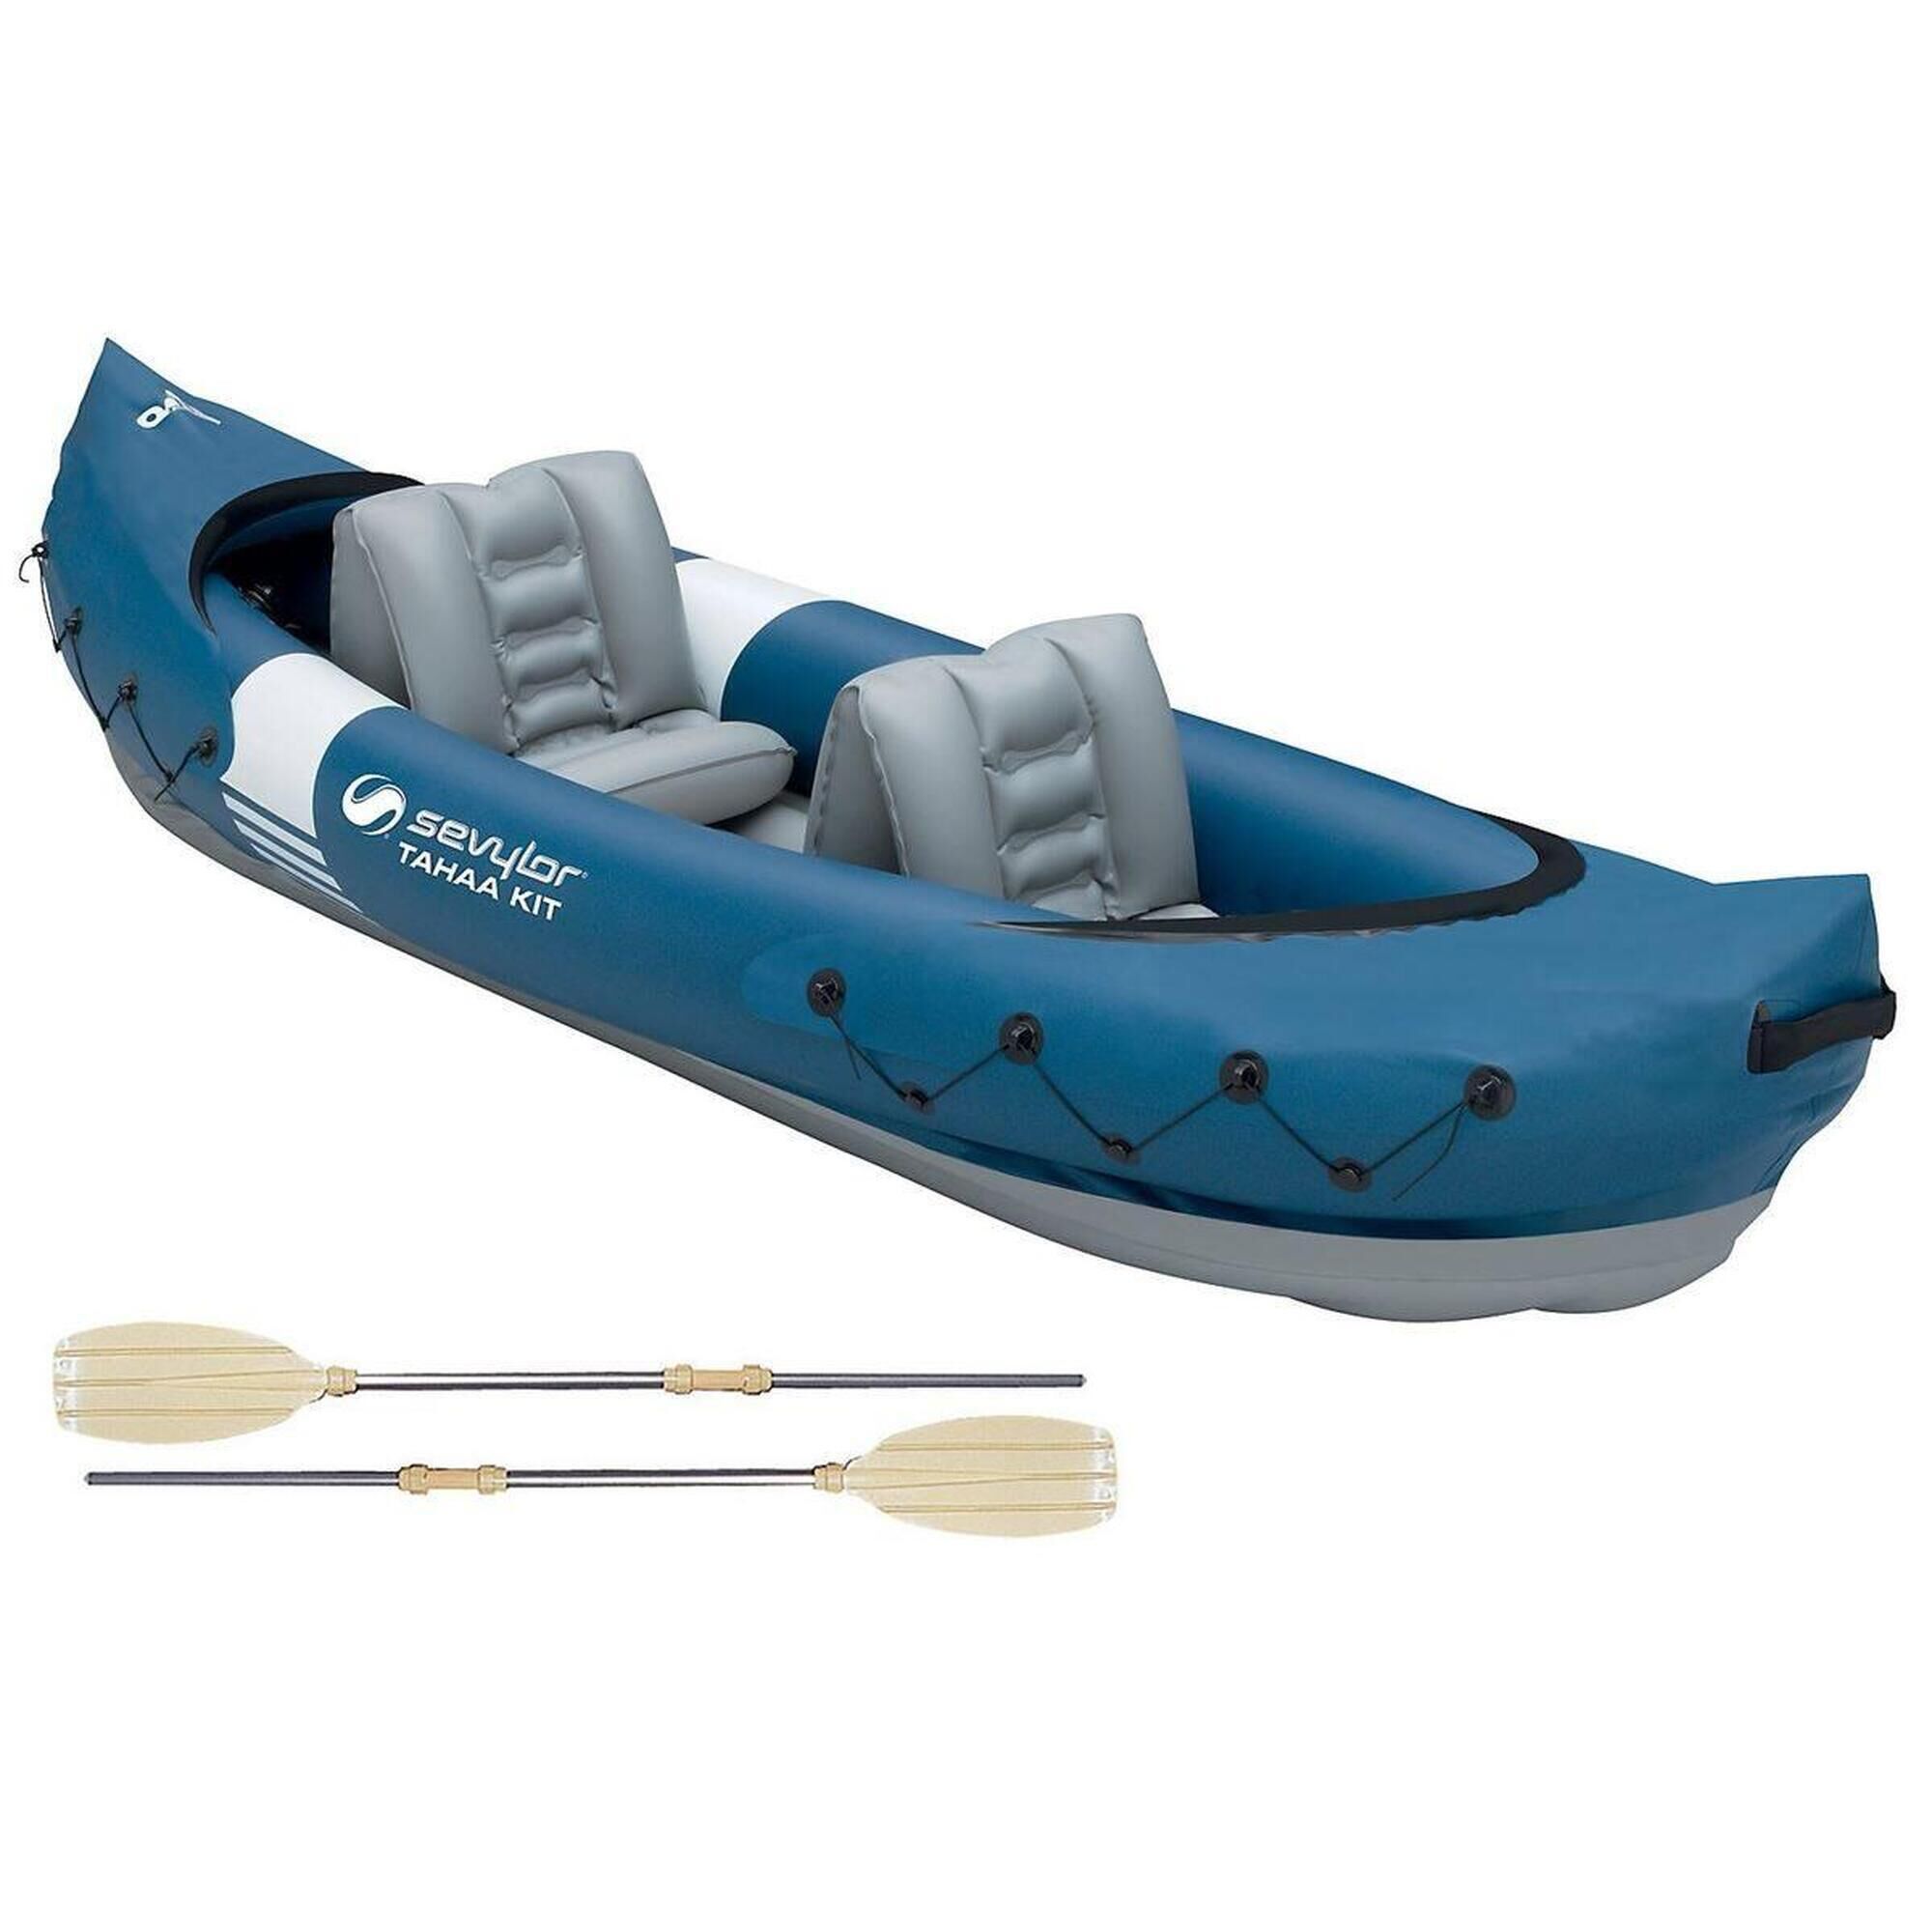 SEVYLOR Tahaa Kit 2 Person Inflatable Touring Kayak - Blue